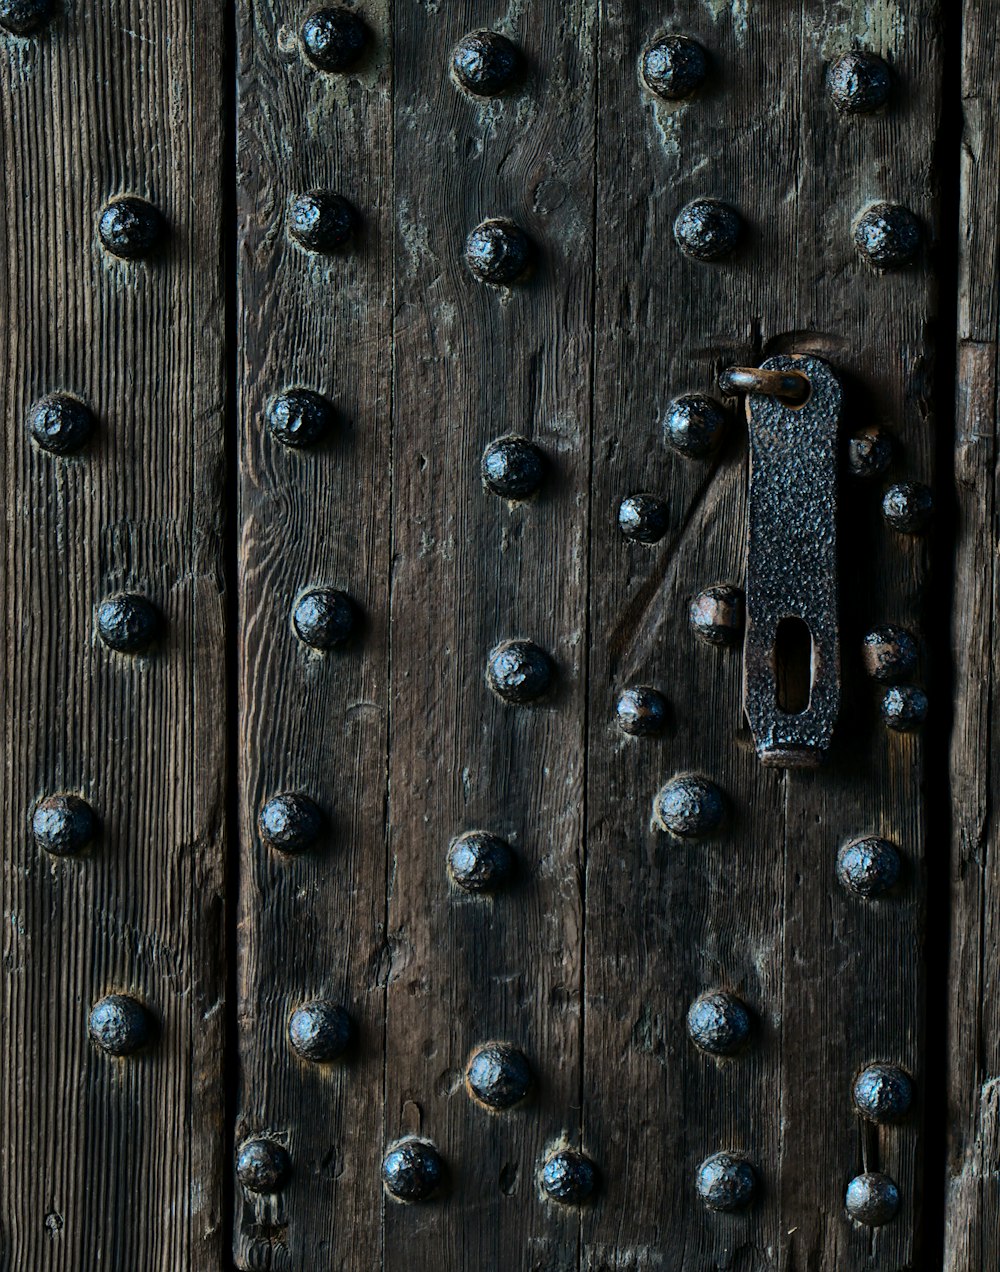 a wooden door with metal rivets on it